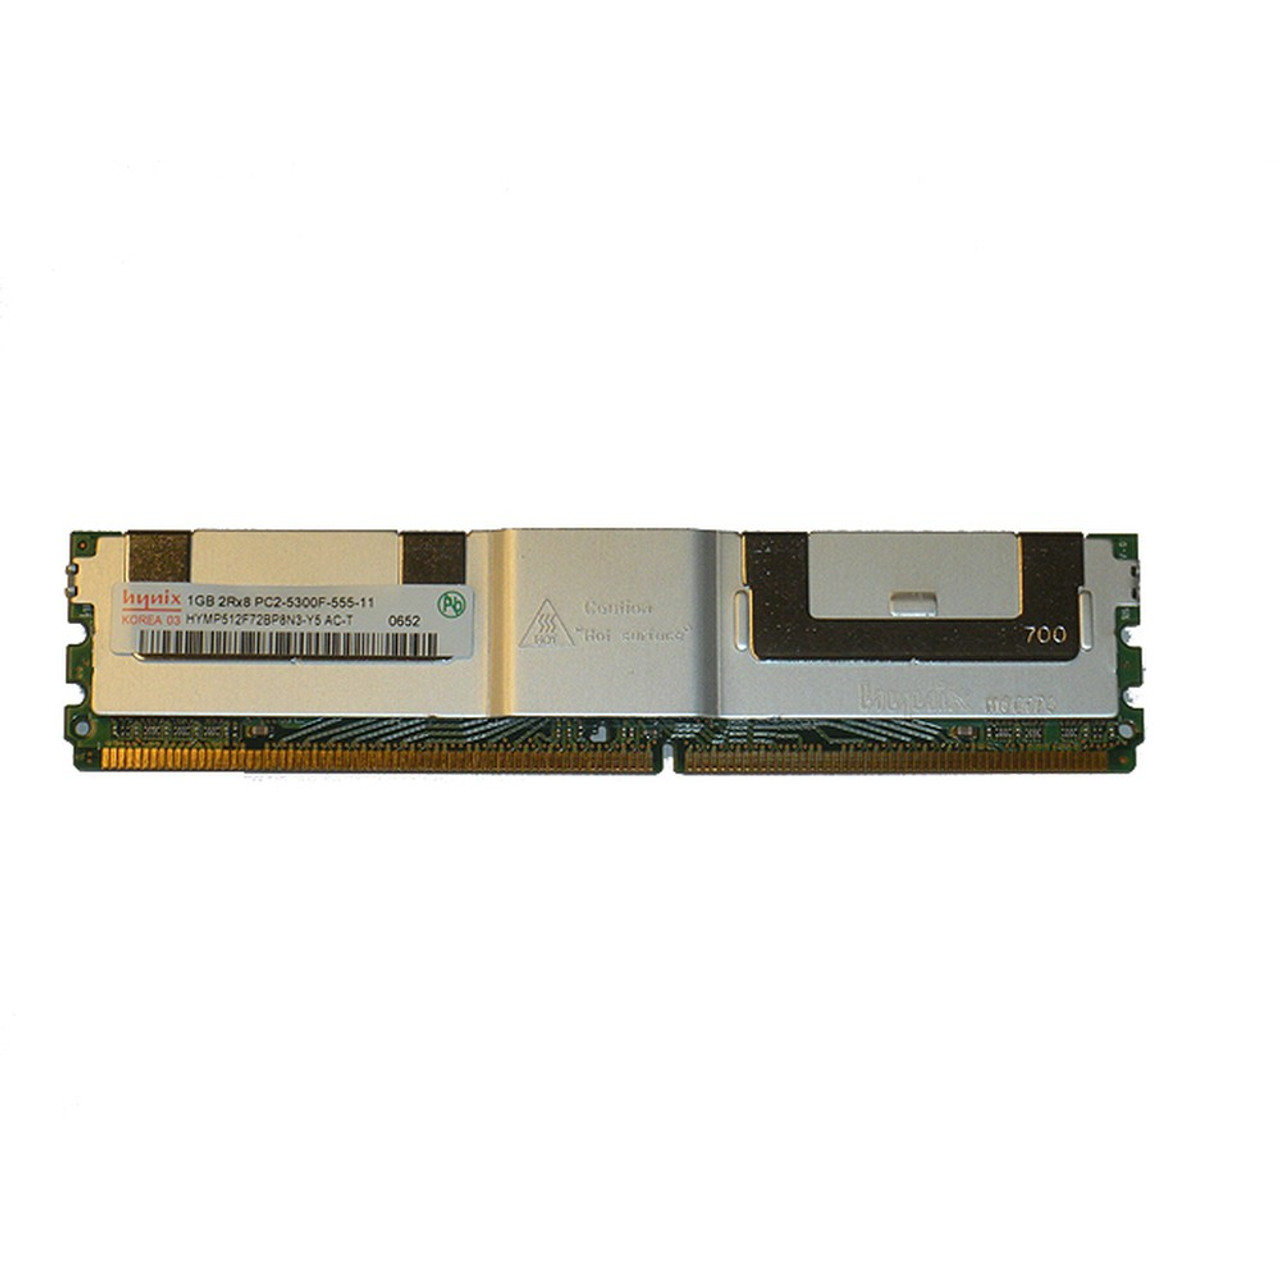 1GB PC2-5300F 667MHz 2RX8 DDR2 ECC Memory RAM DIMM NP948